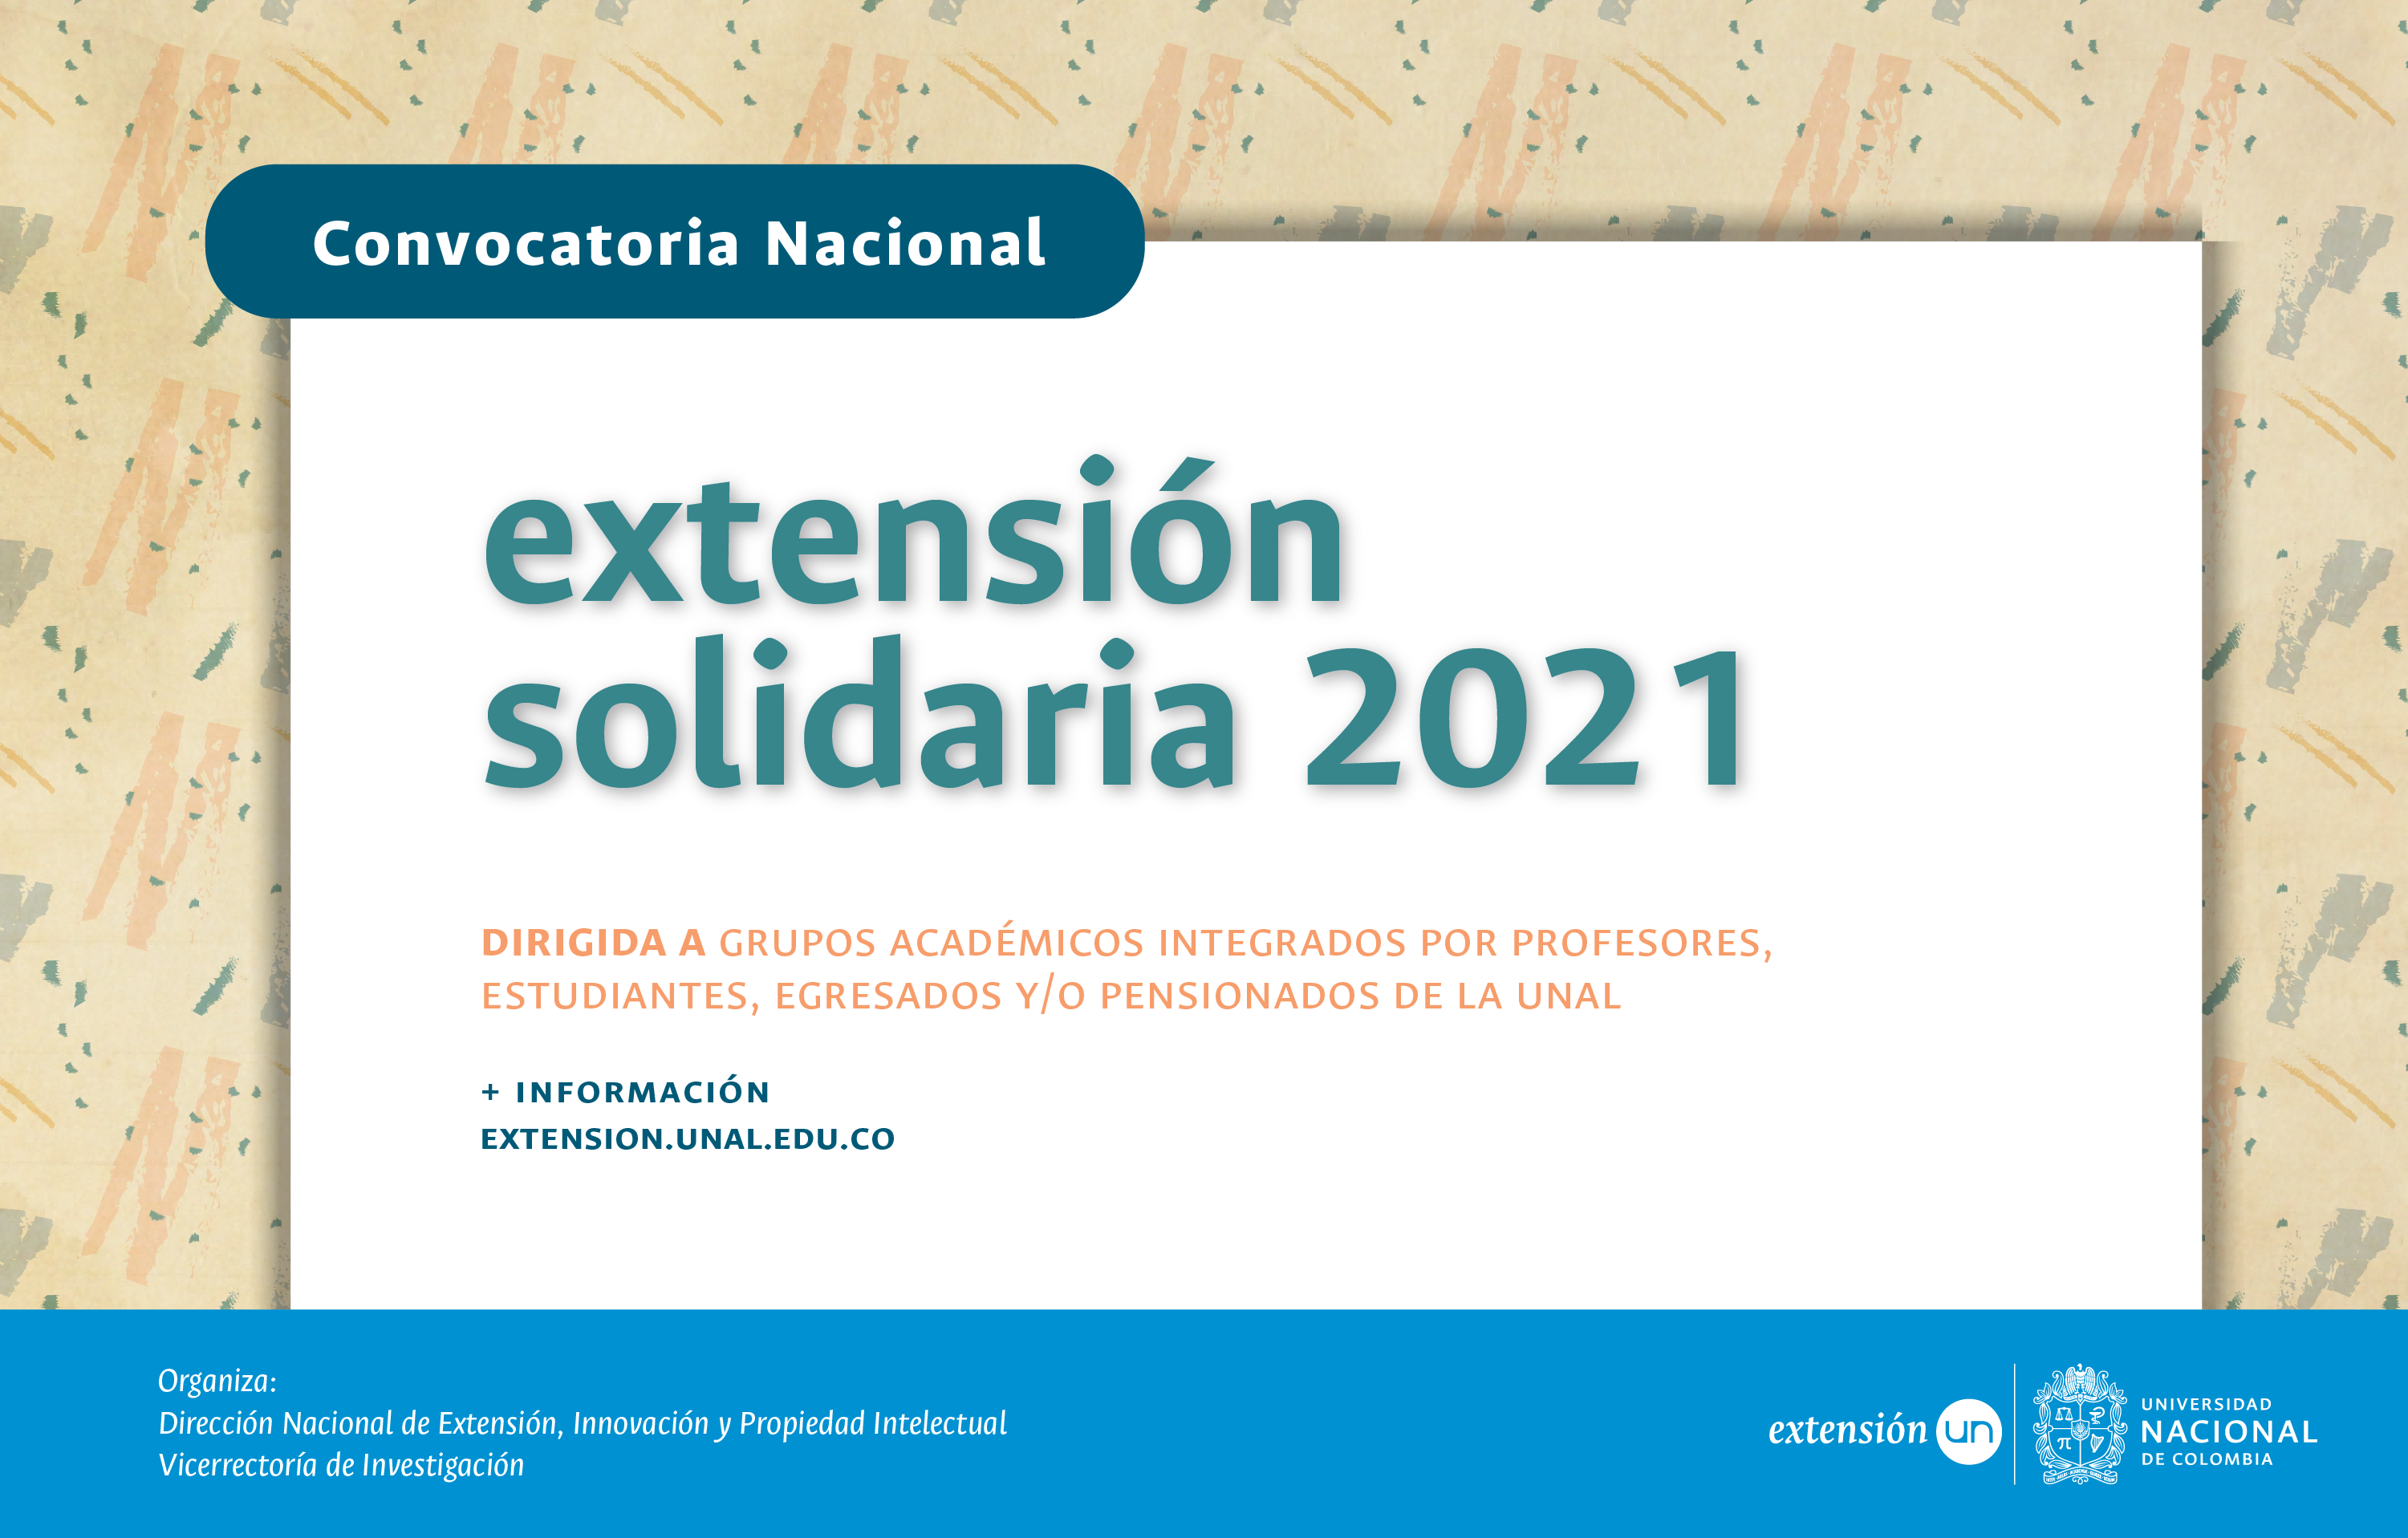 http://extension.unal.edu.co/convocatorias/nacional-extensionsolidaria2021/